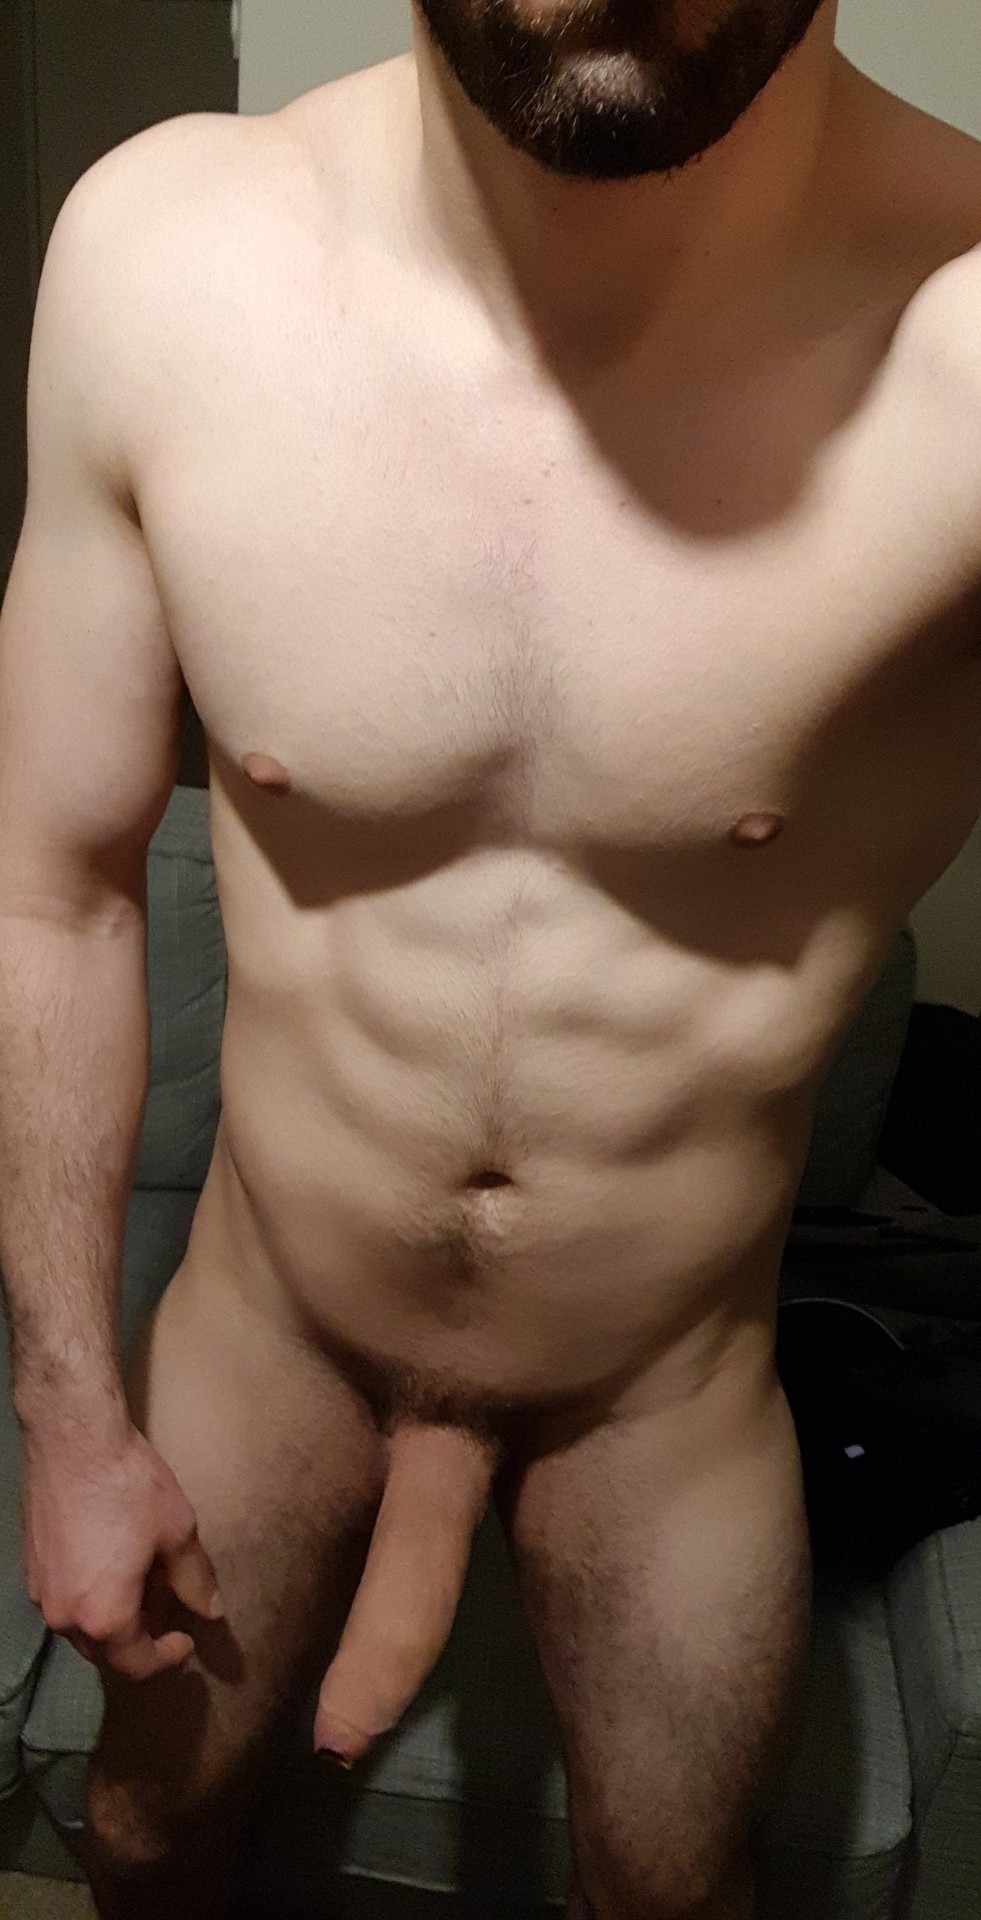 real straight men nude selfies free photo